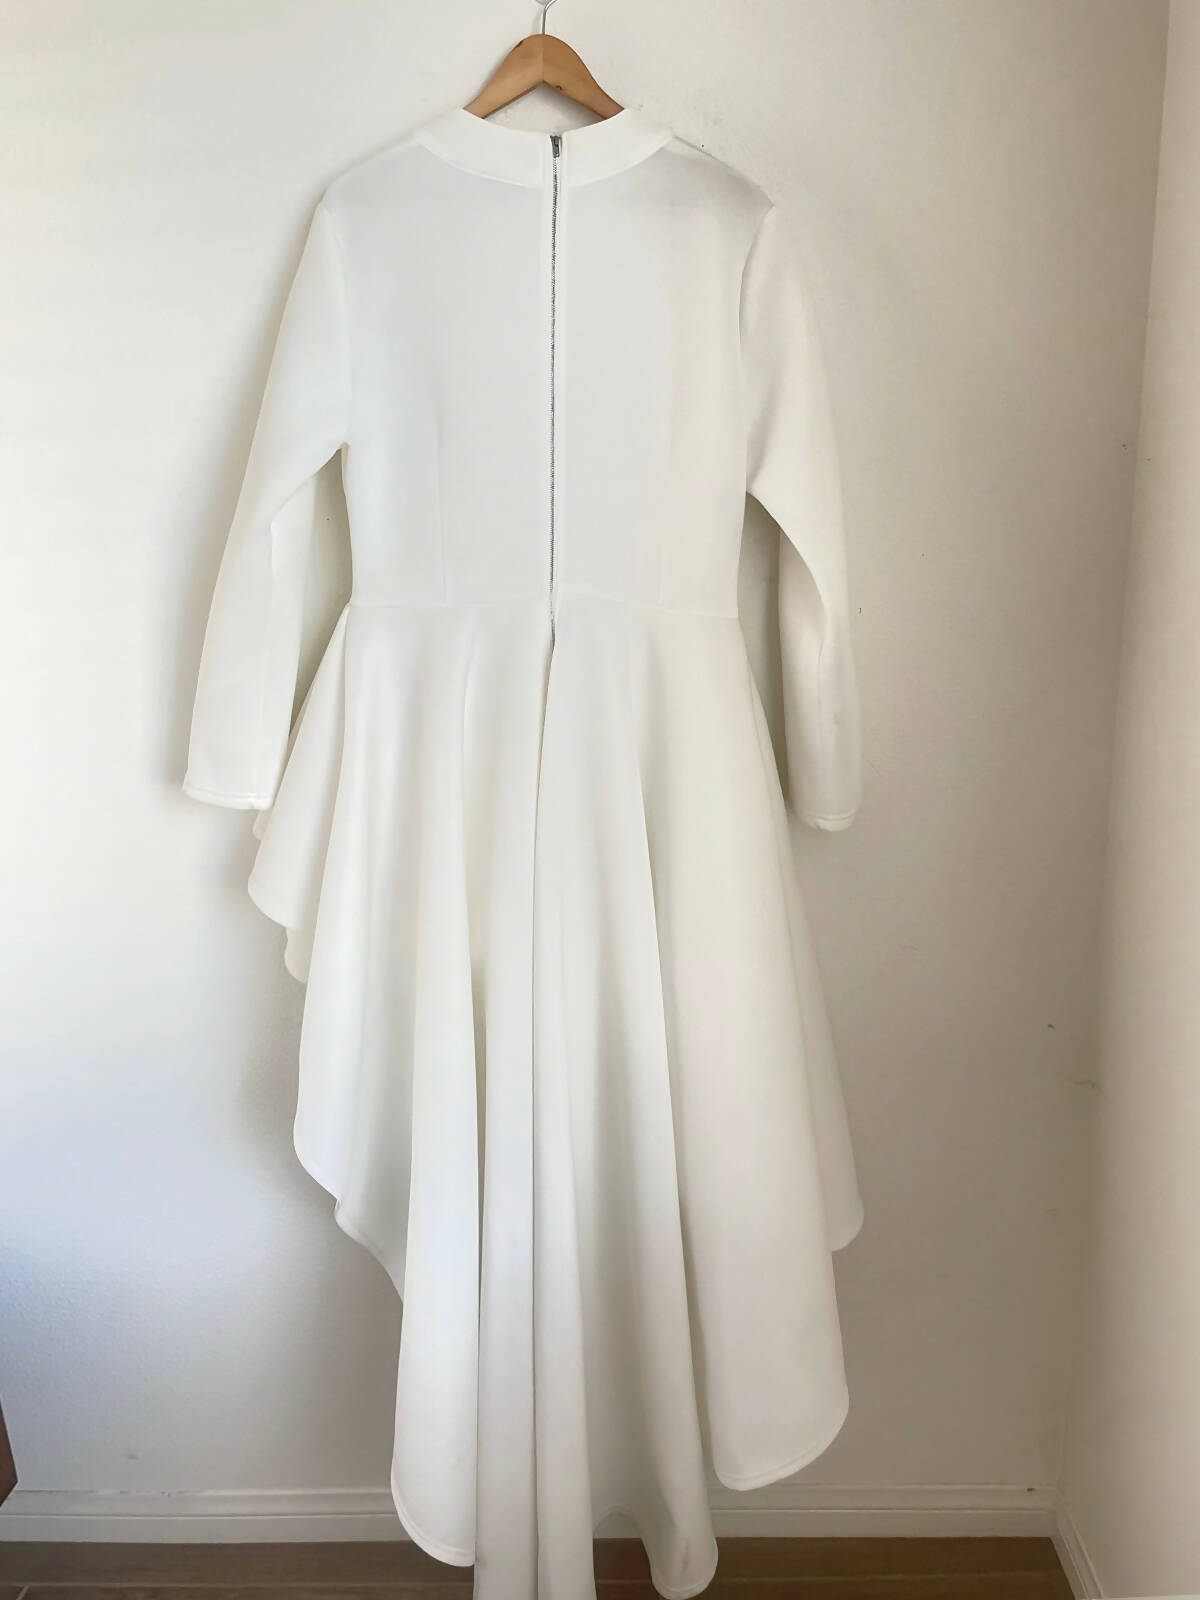 Peplum layered long sleeve dress